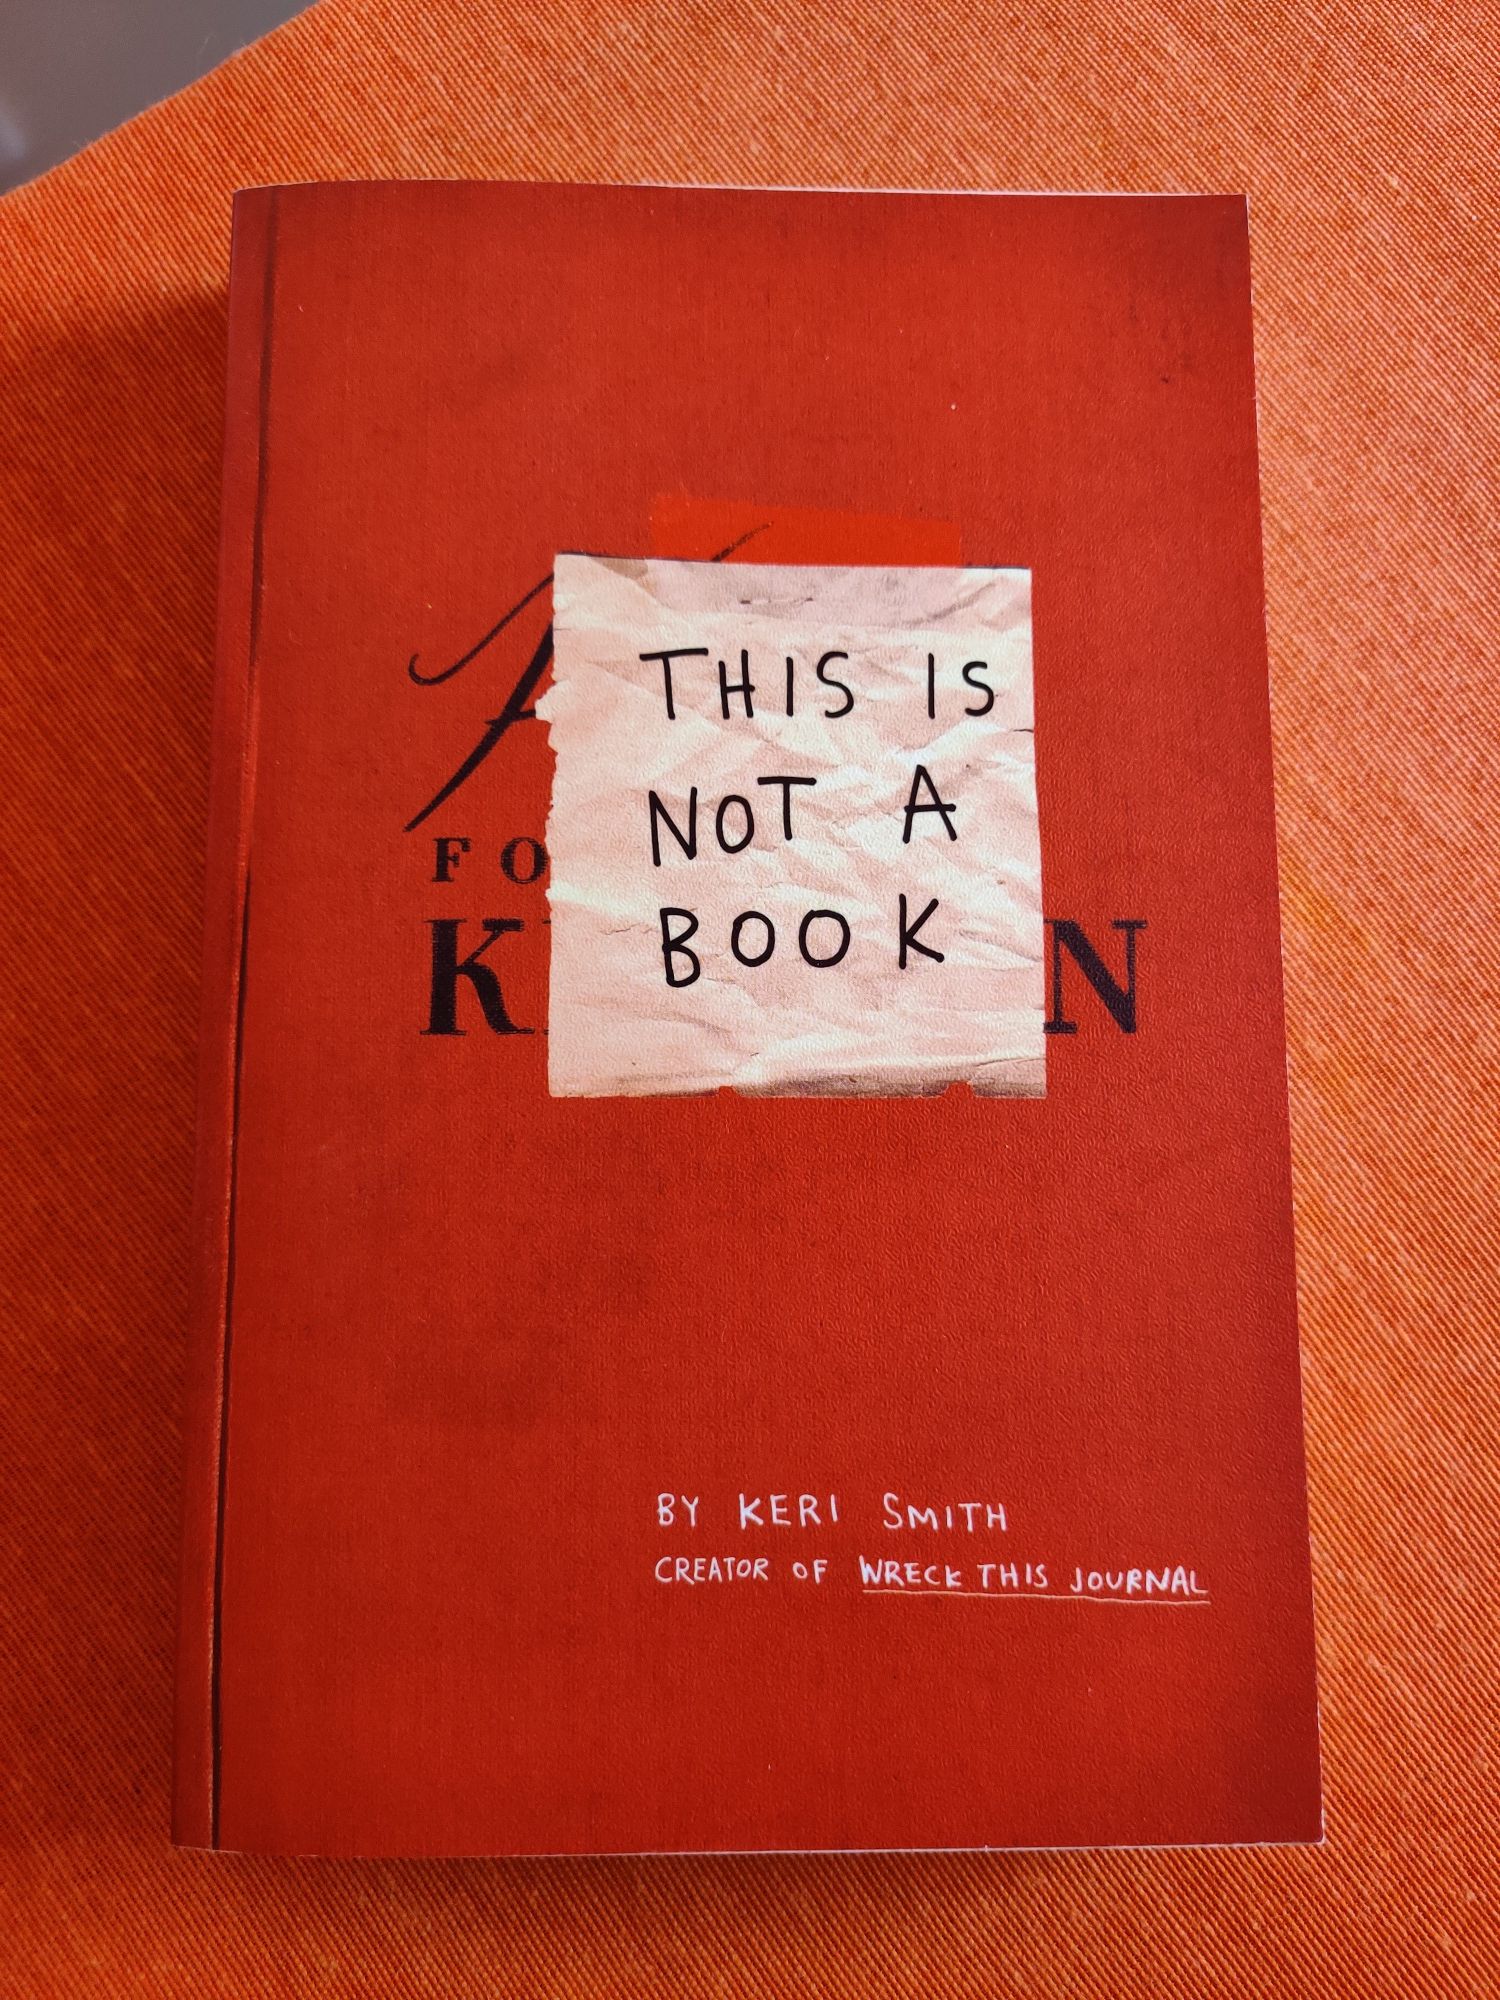 Livro criativo "this is not a book", Keri Smith OFERTA PORTES